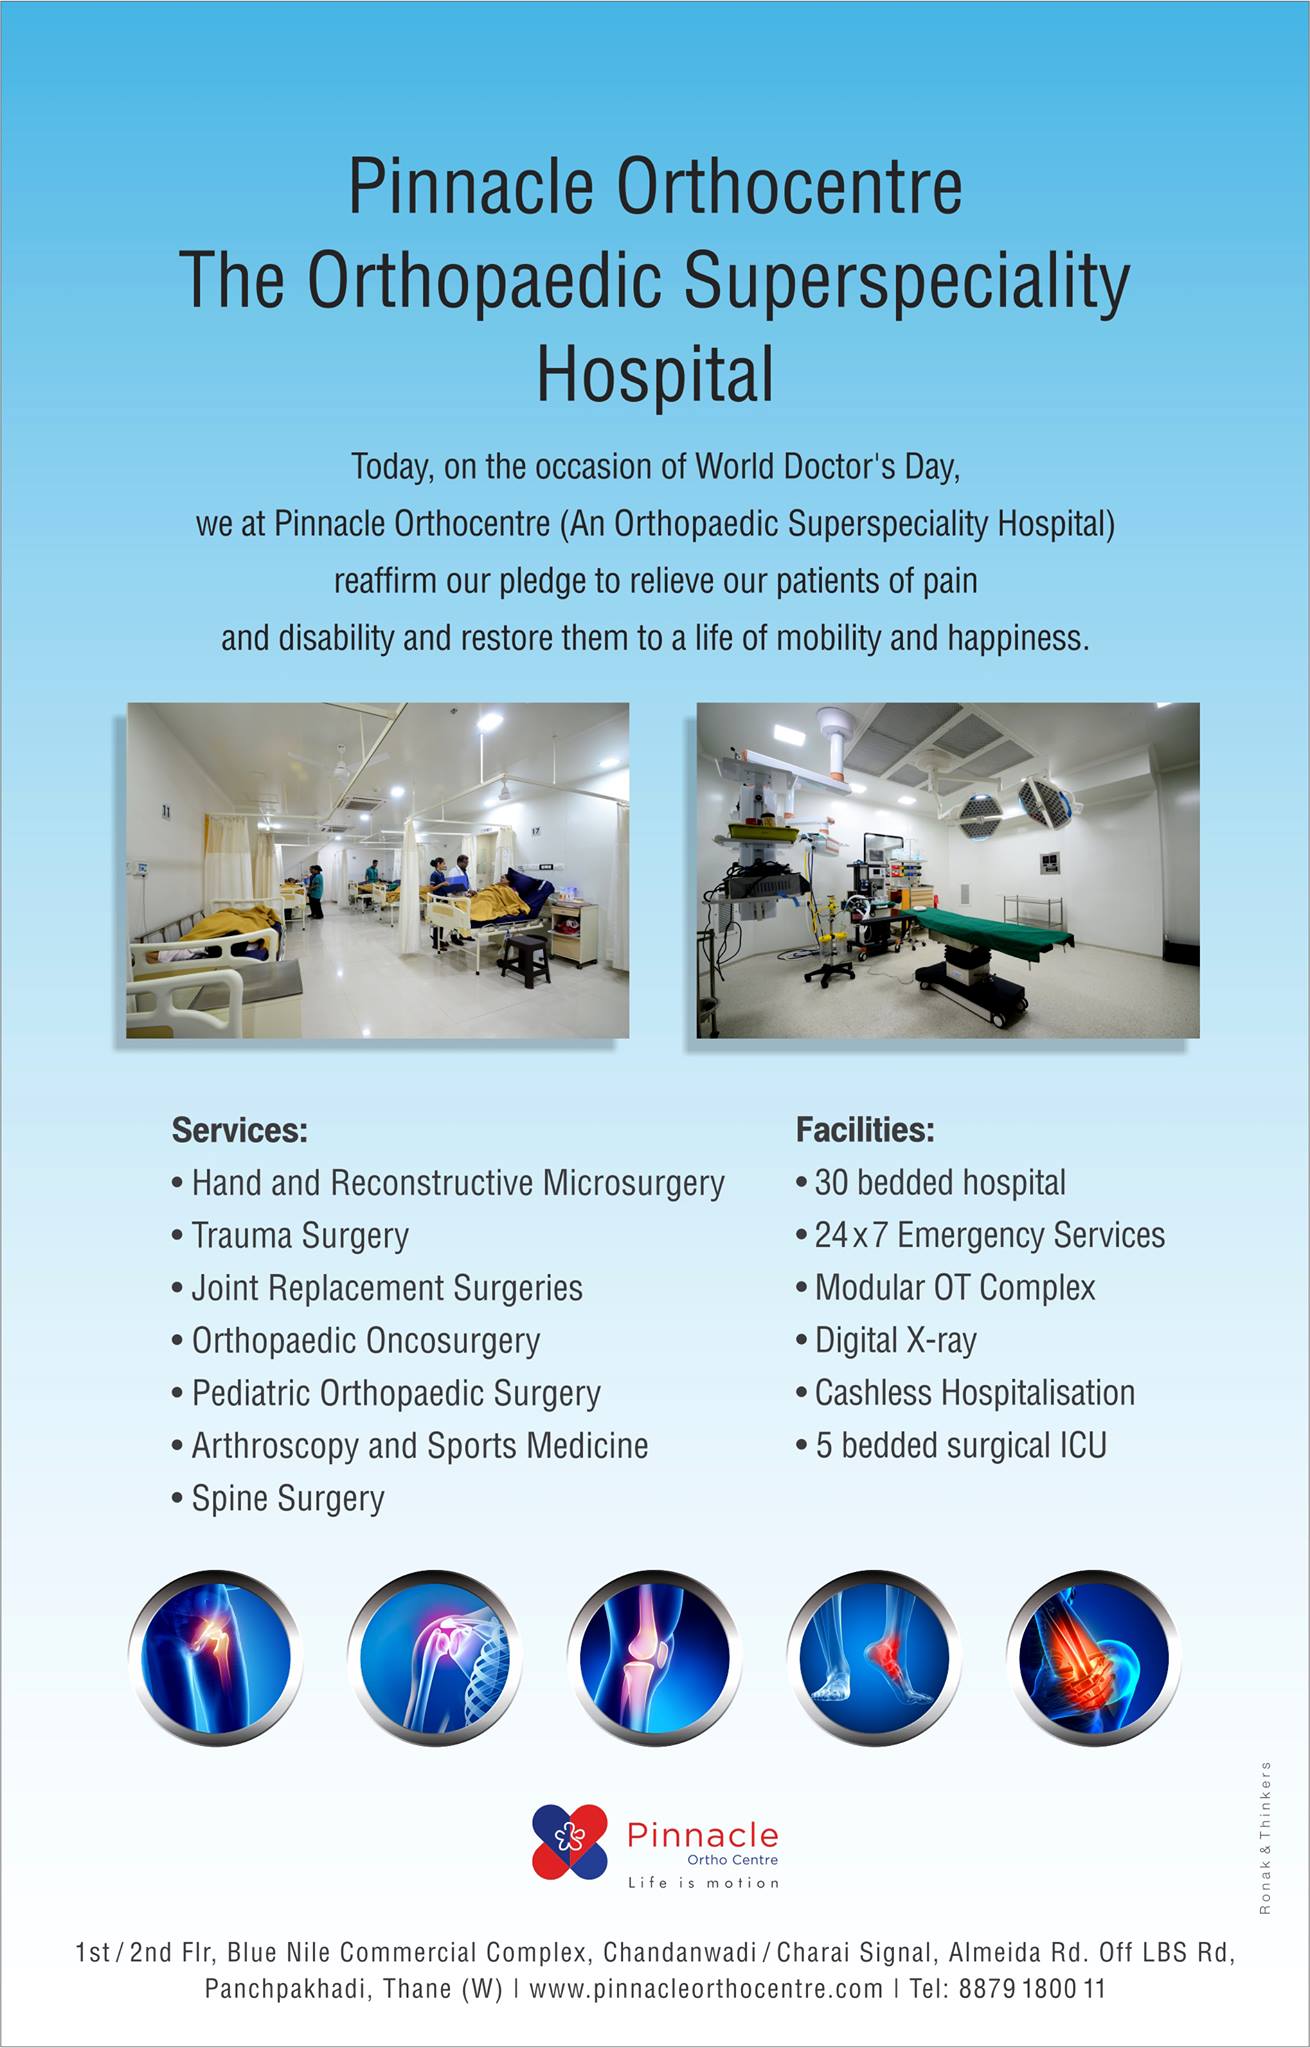 Pinnacle Orthocentre Orthopaedic Superspeciality Hospital